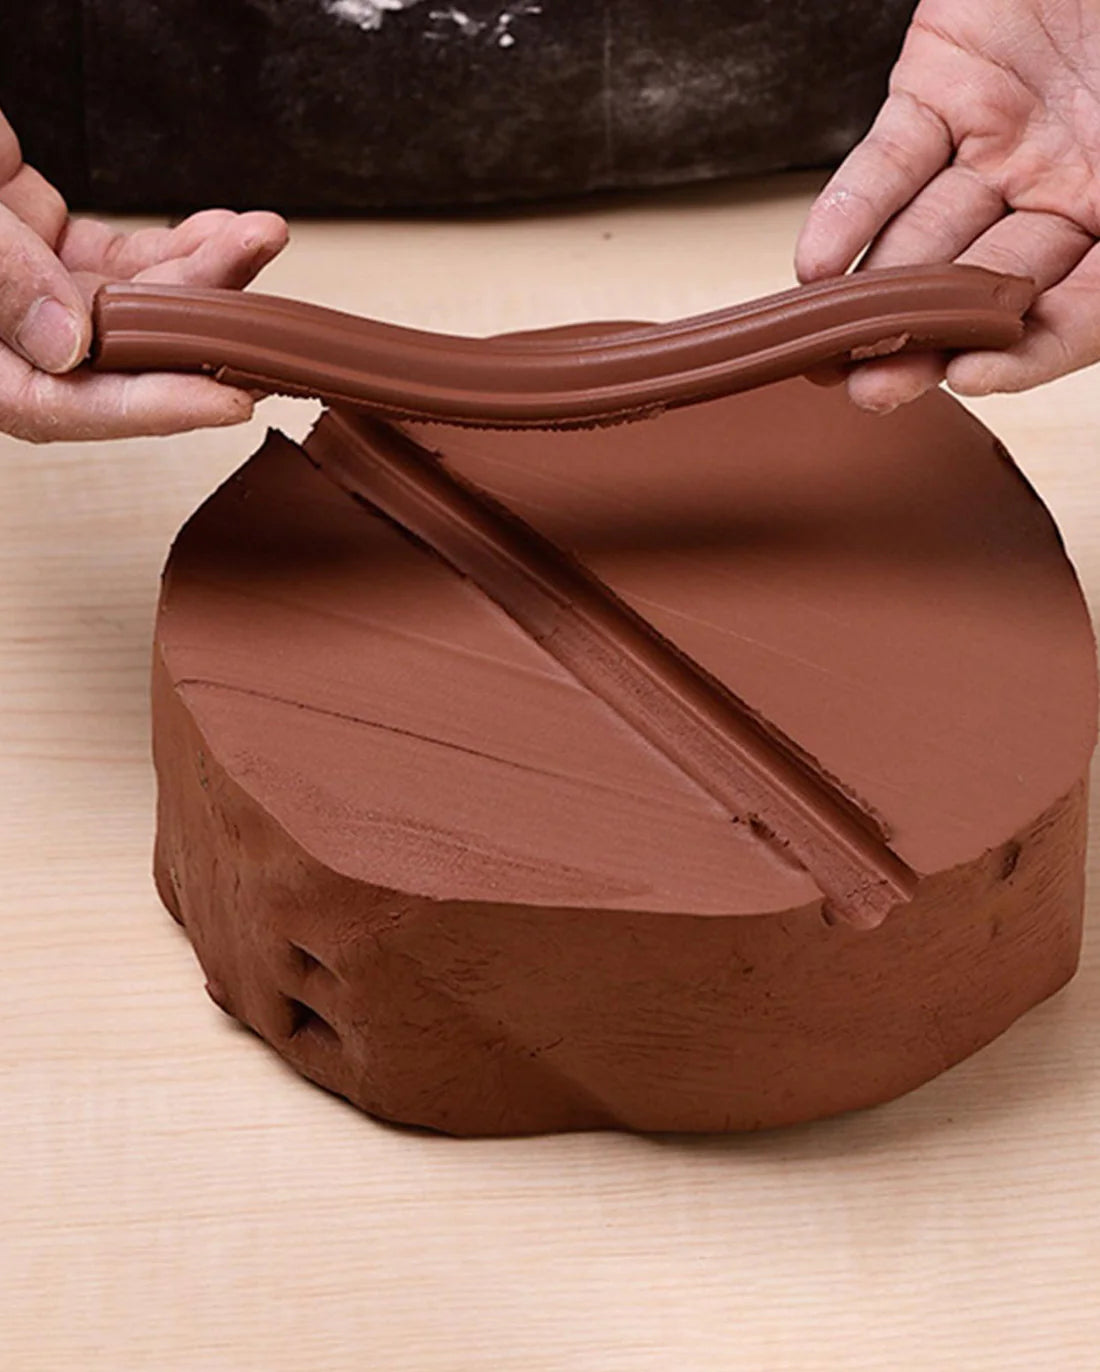 Mug Handle Carving Tools by Sanbao Studios